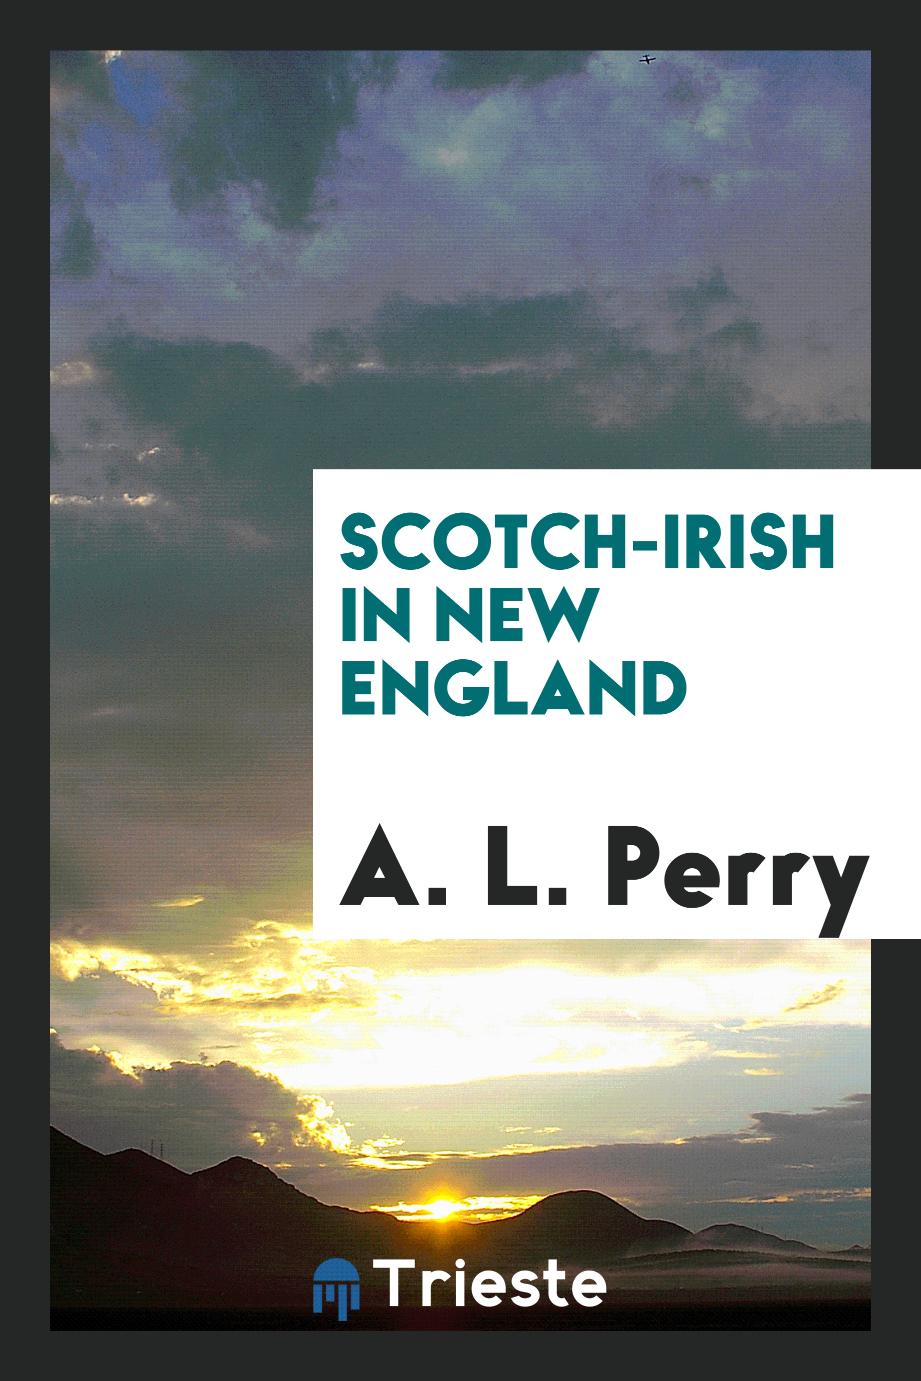 A. L. Perry - Scotch-Irish in New England